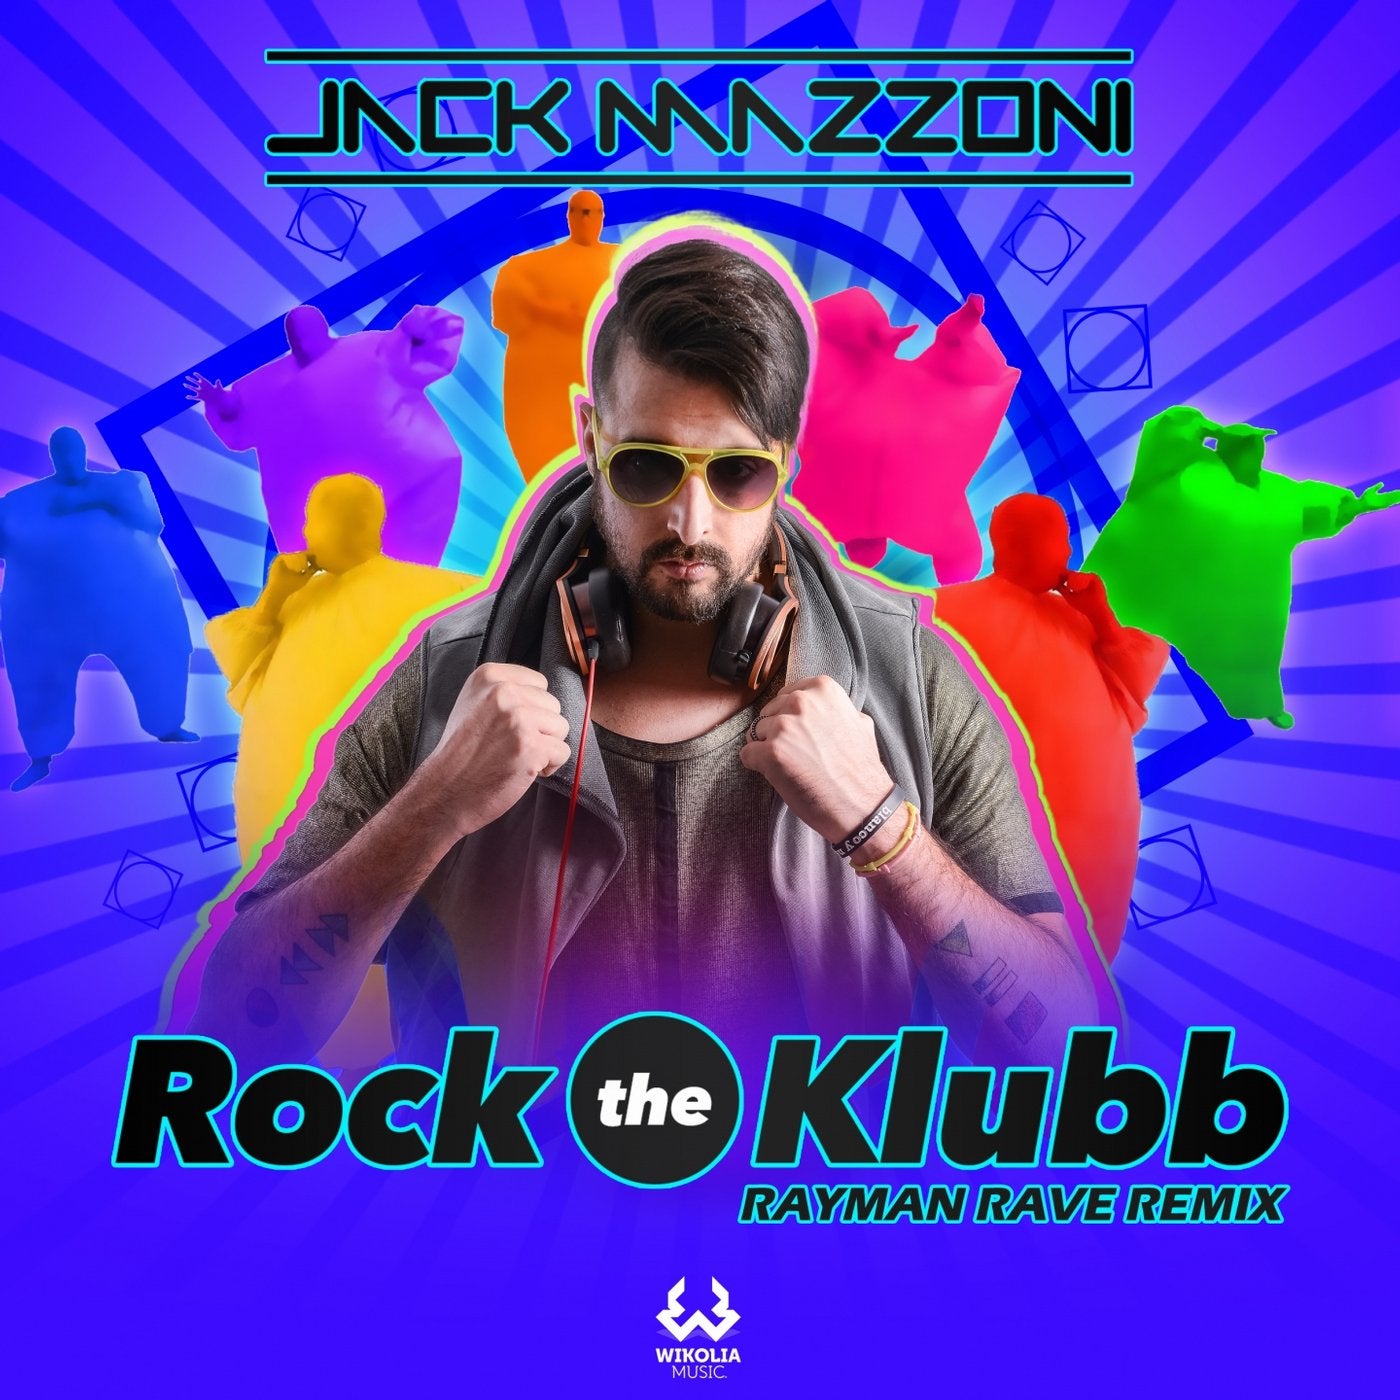 Rock the Klubb (Rayman Rave Remix)